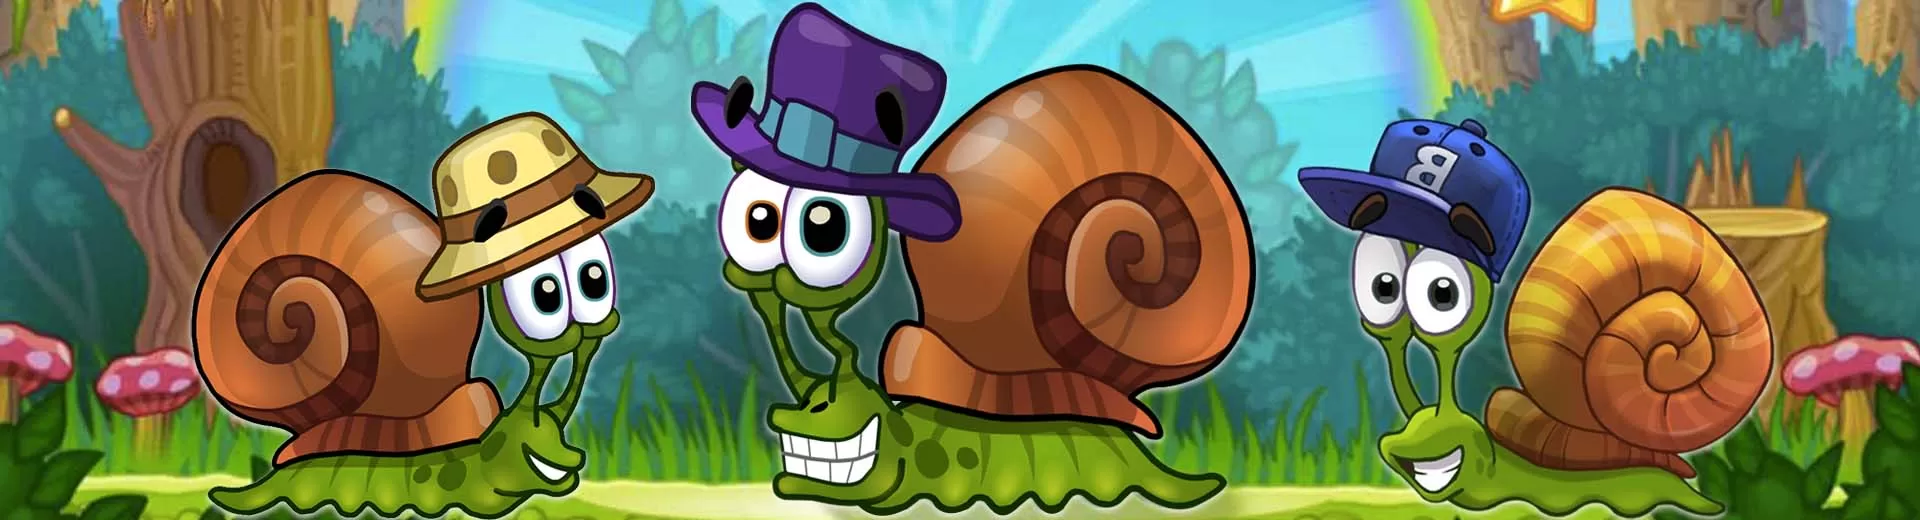 Snail Bob 2 Emulator Pc